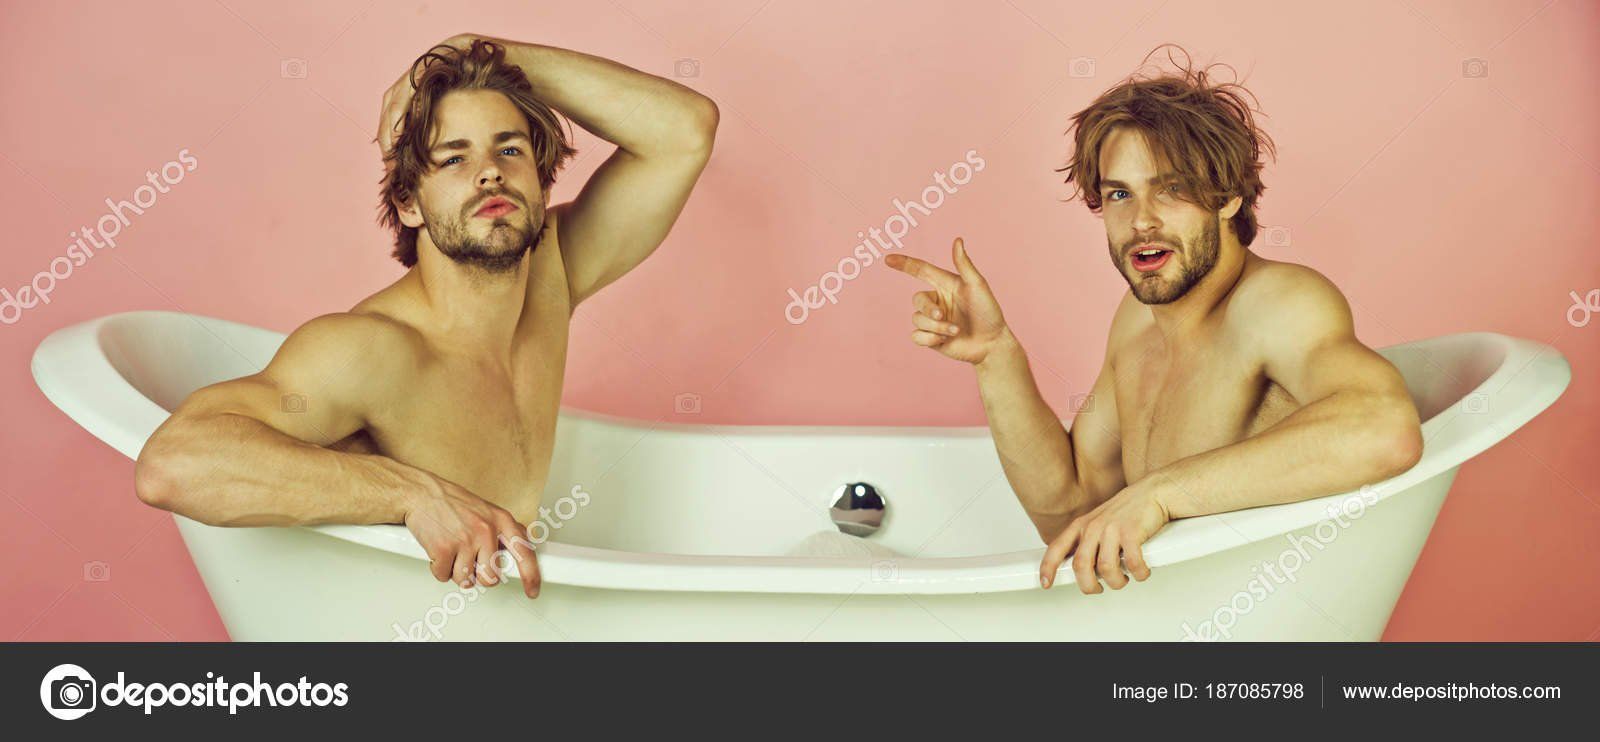 Indiana reccomend Bath gay tub